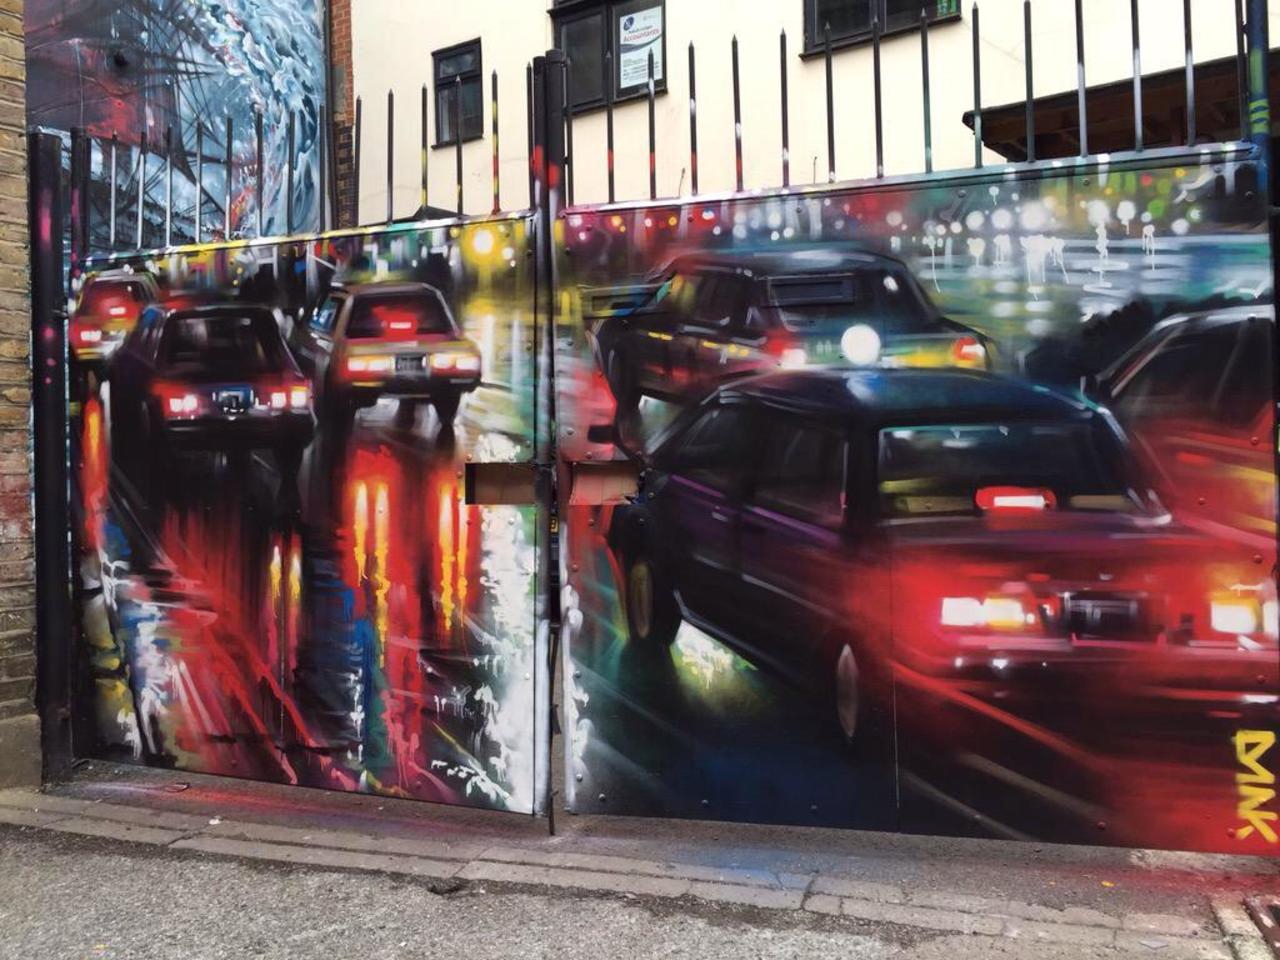 New Street Art by DanKitchener in Brick Lane London 

#art #graffiti #mural #streetart http://t.co/adwgizqCEf